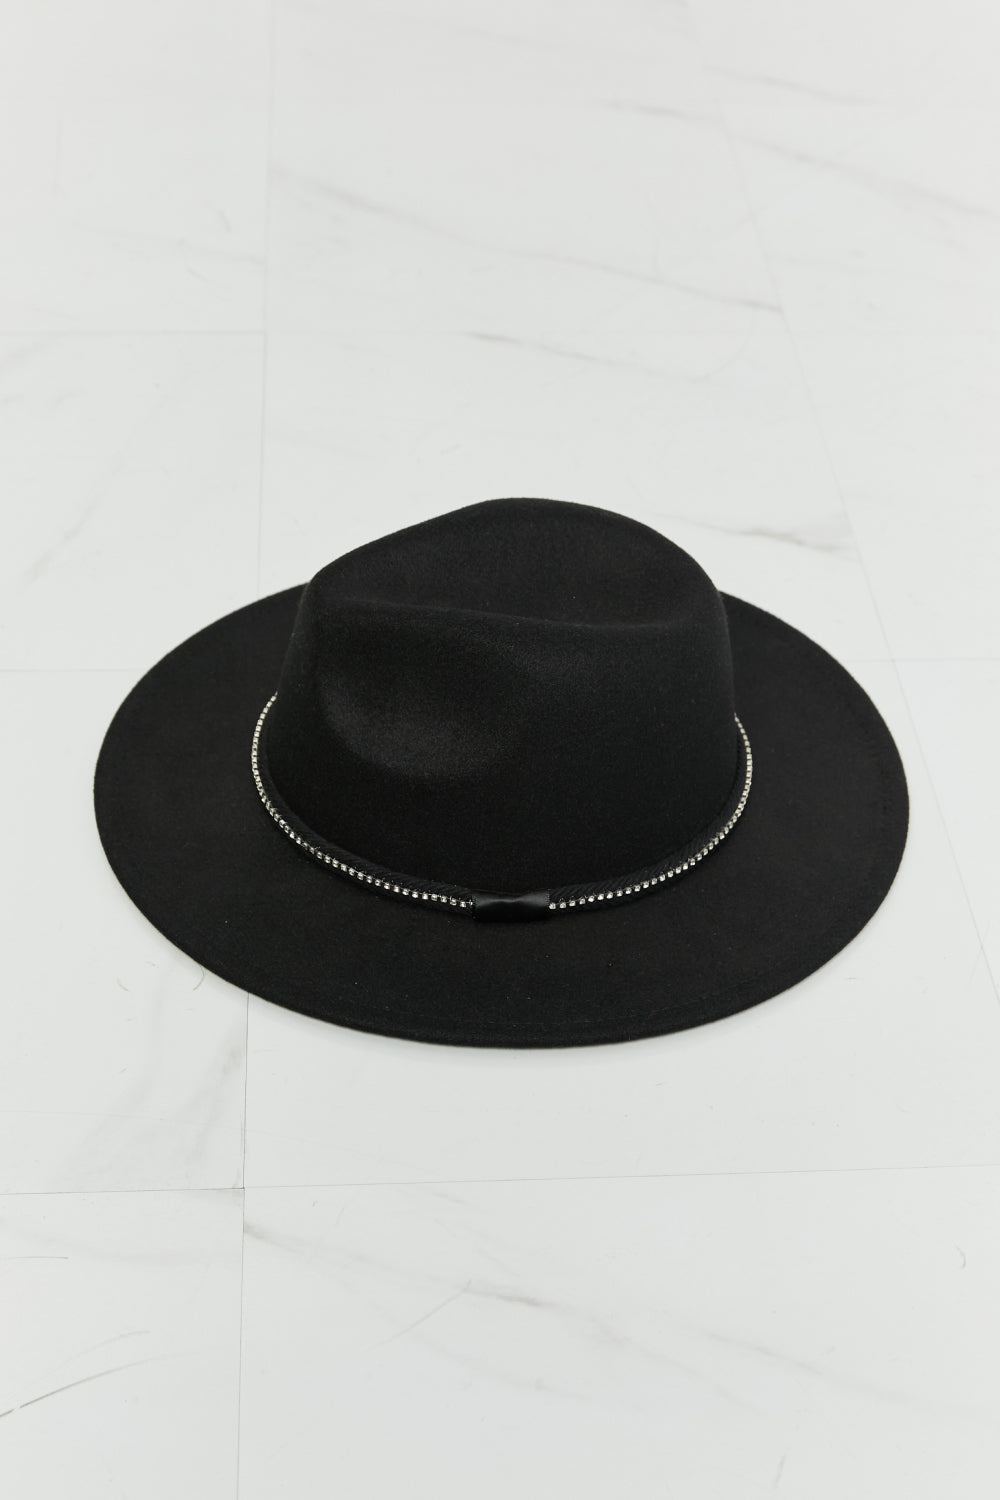 Fame Bring It Back Fedora Hat - TiffanyzKlozet